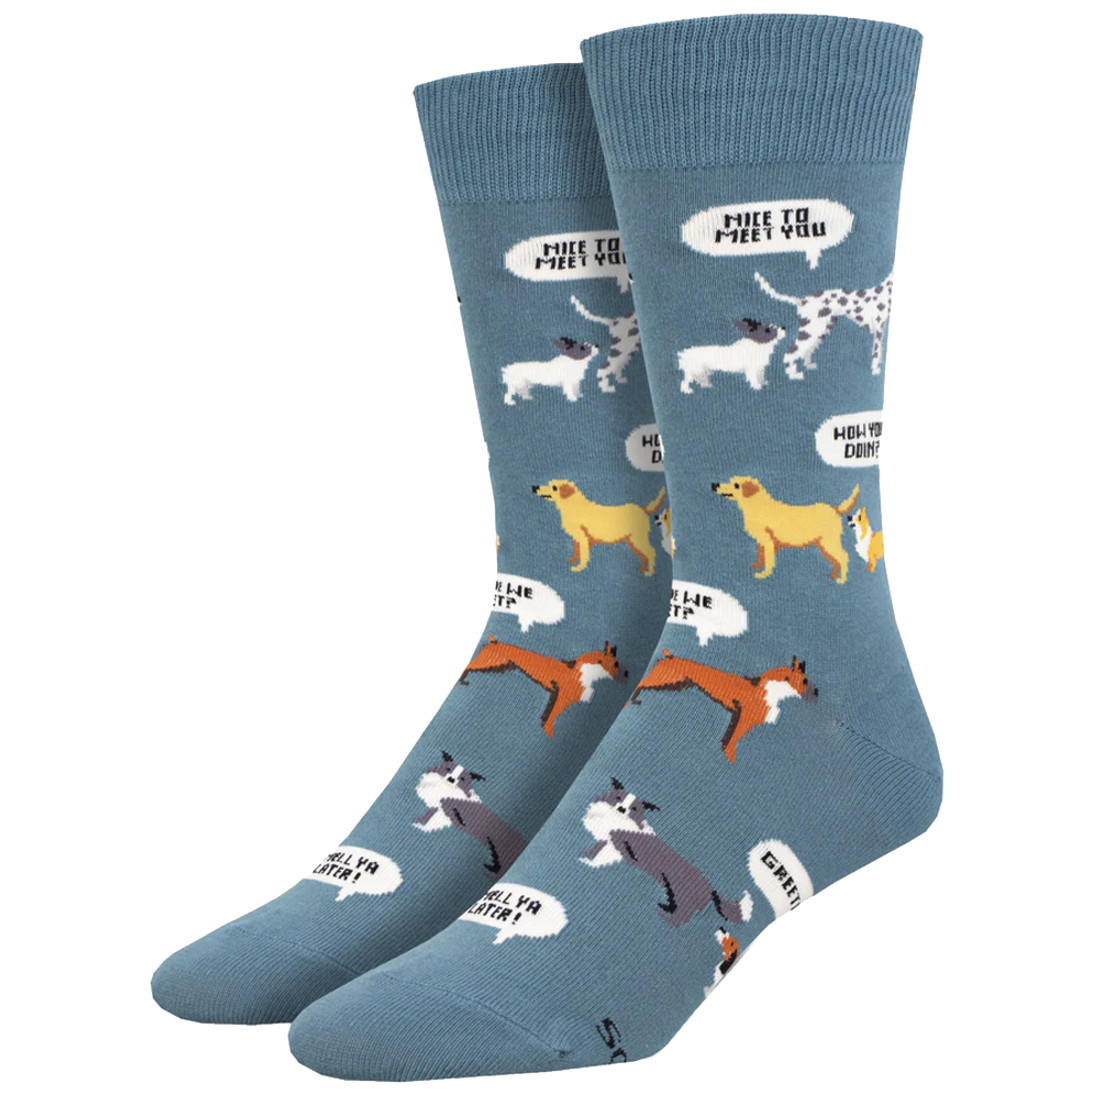 Nice To Meet You New Dog Men's Socks